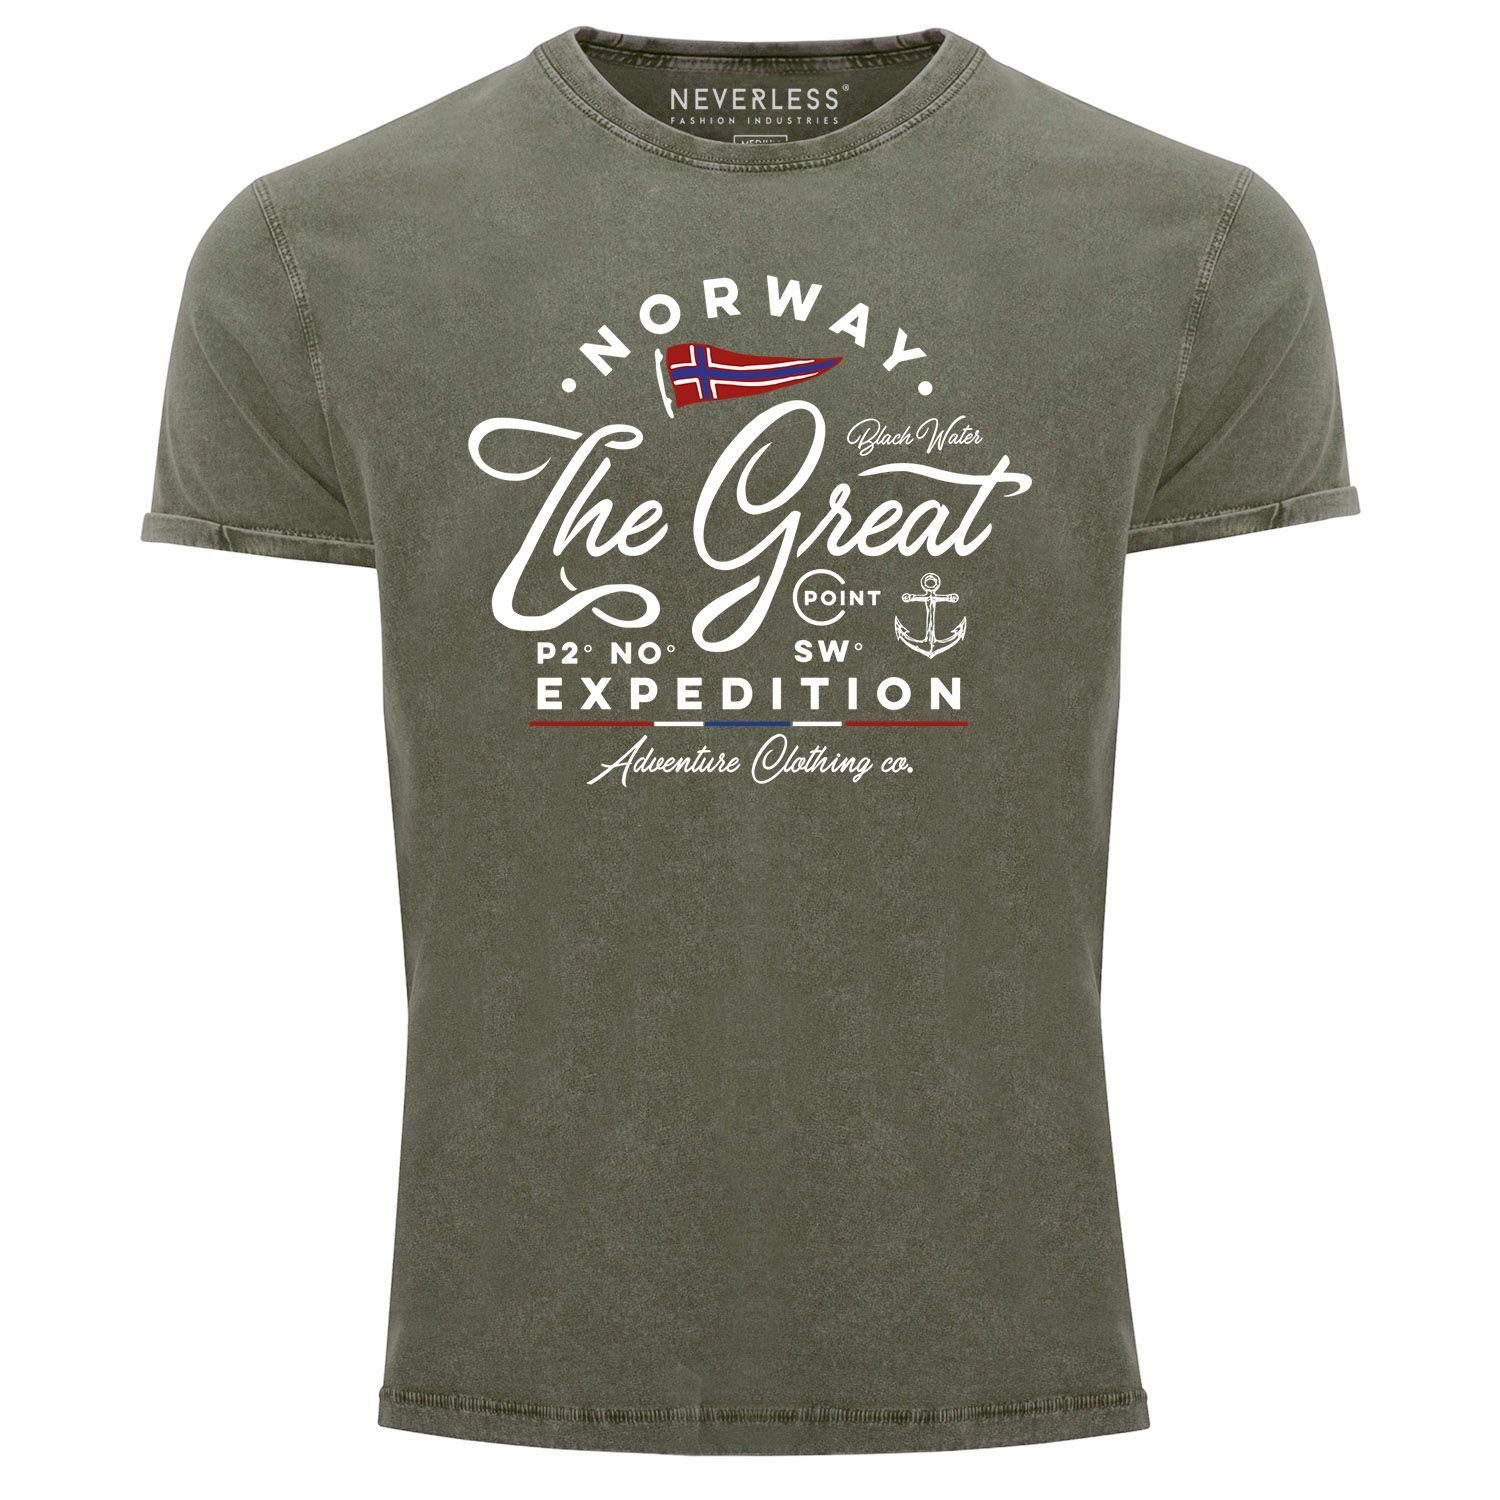 Neverless Print-Shirt Herren Vintage Shirt Norwegen The Great Expedition Outdoor Adventure Printshirt T-Shirt Aufdruck Used Look Neverless® mit Print oliv